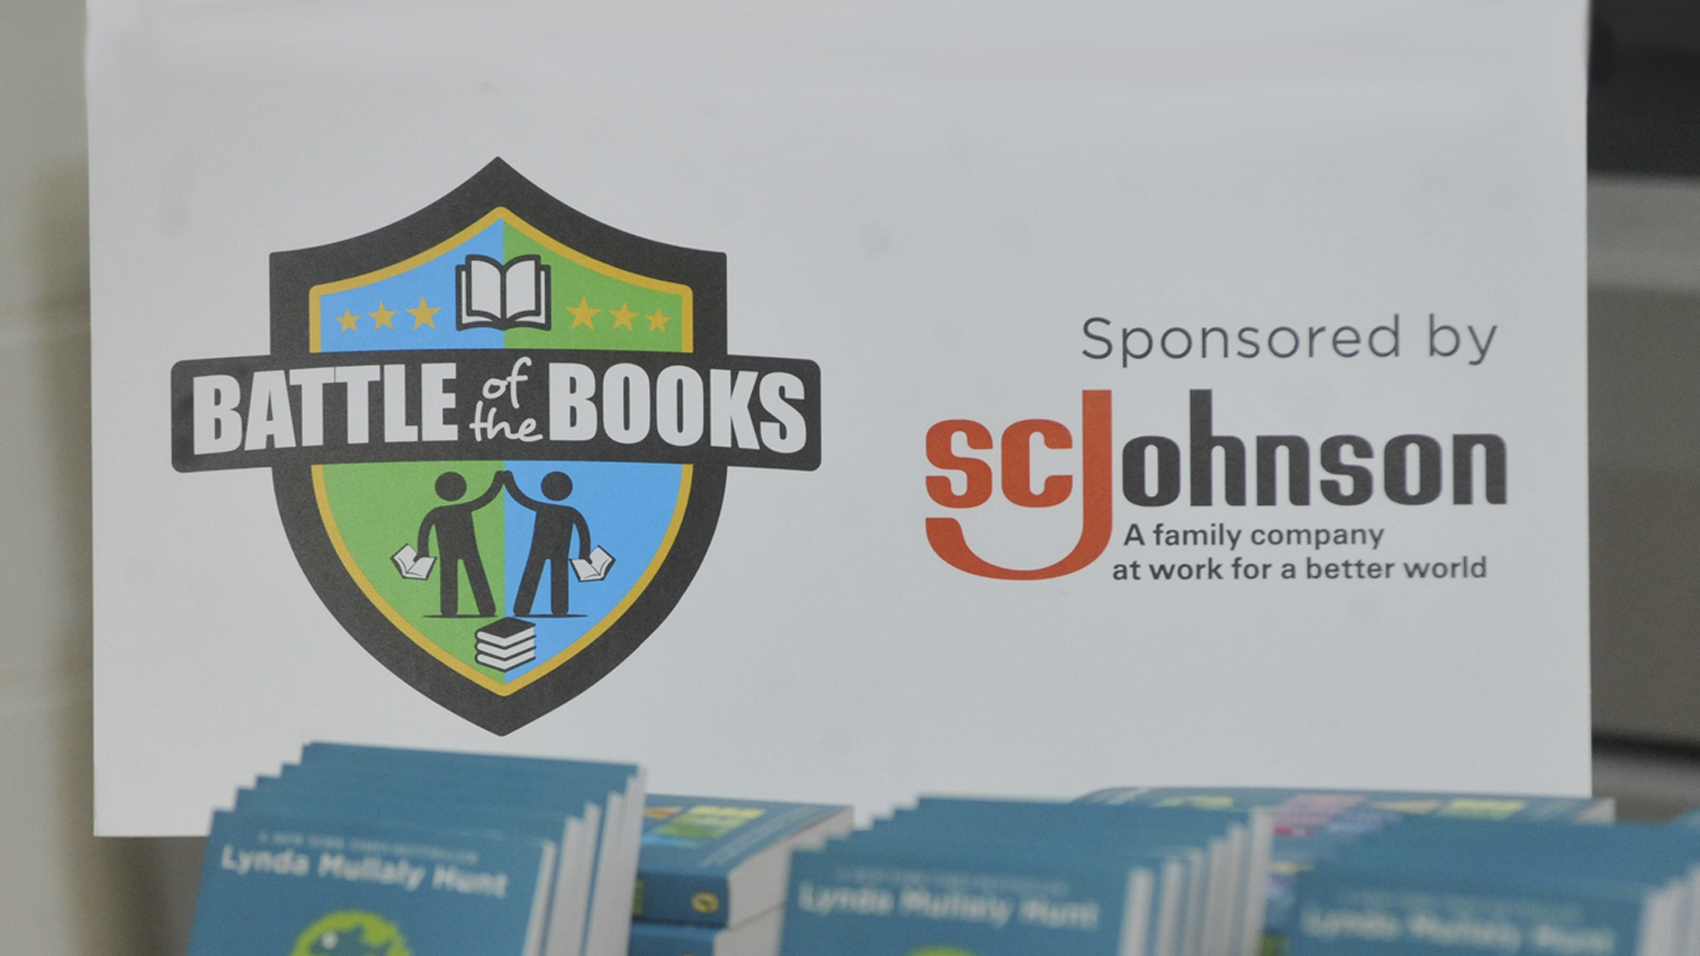 Battle of the Books sponsored by SC Johnson